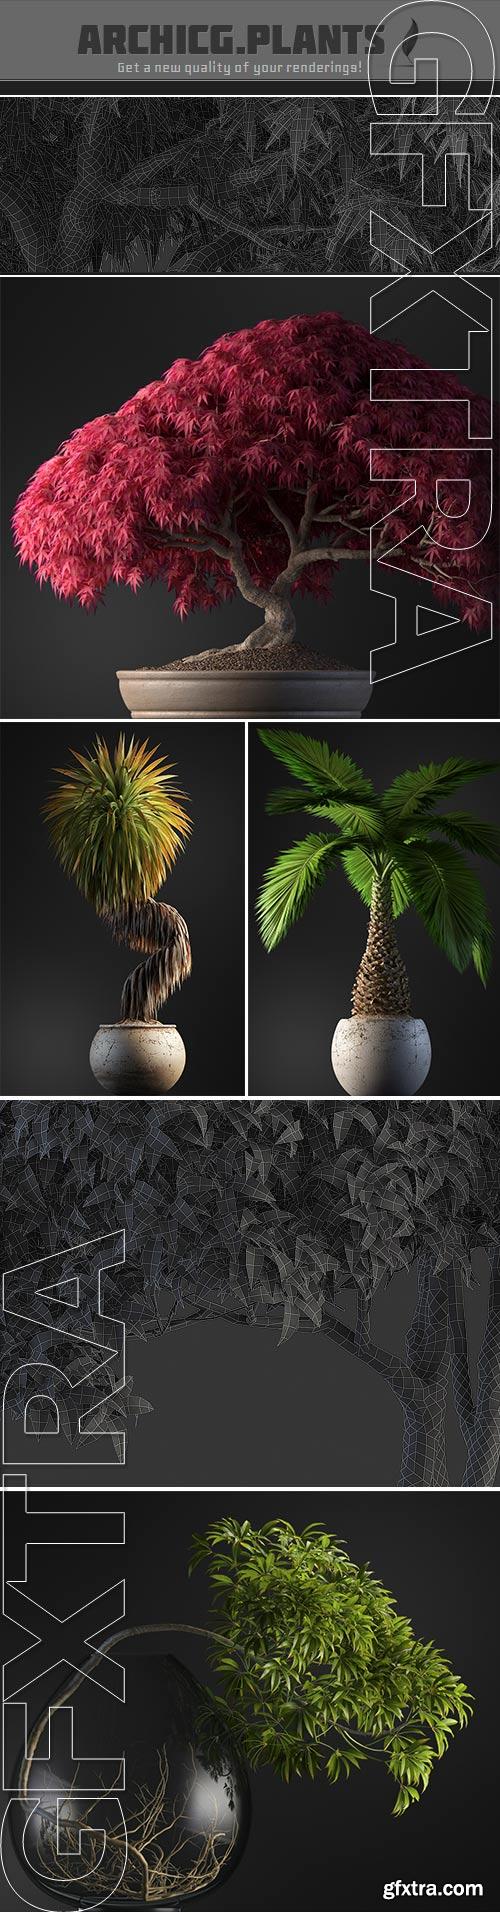 Archicg Plants - Bonsai 4interior v.1